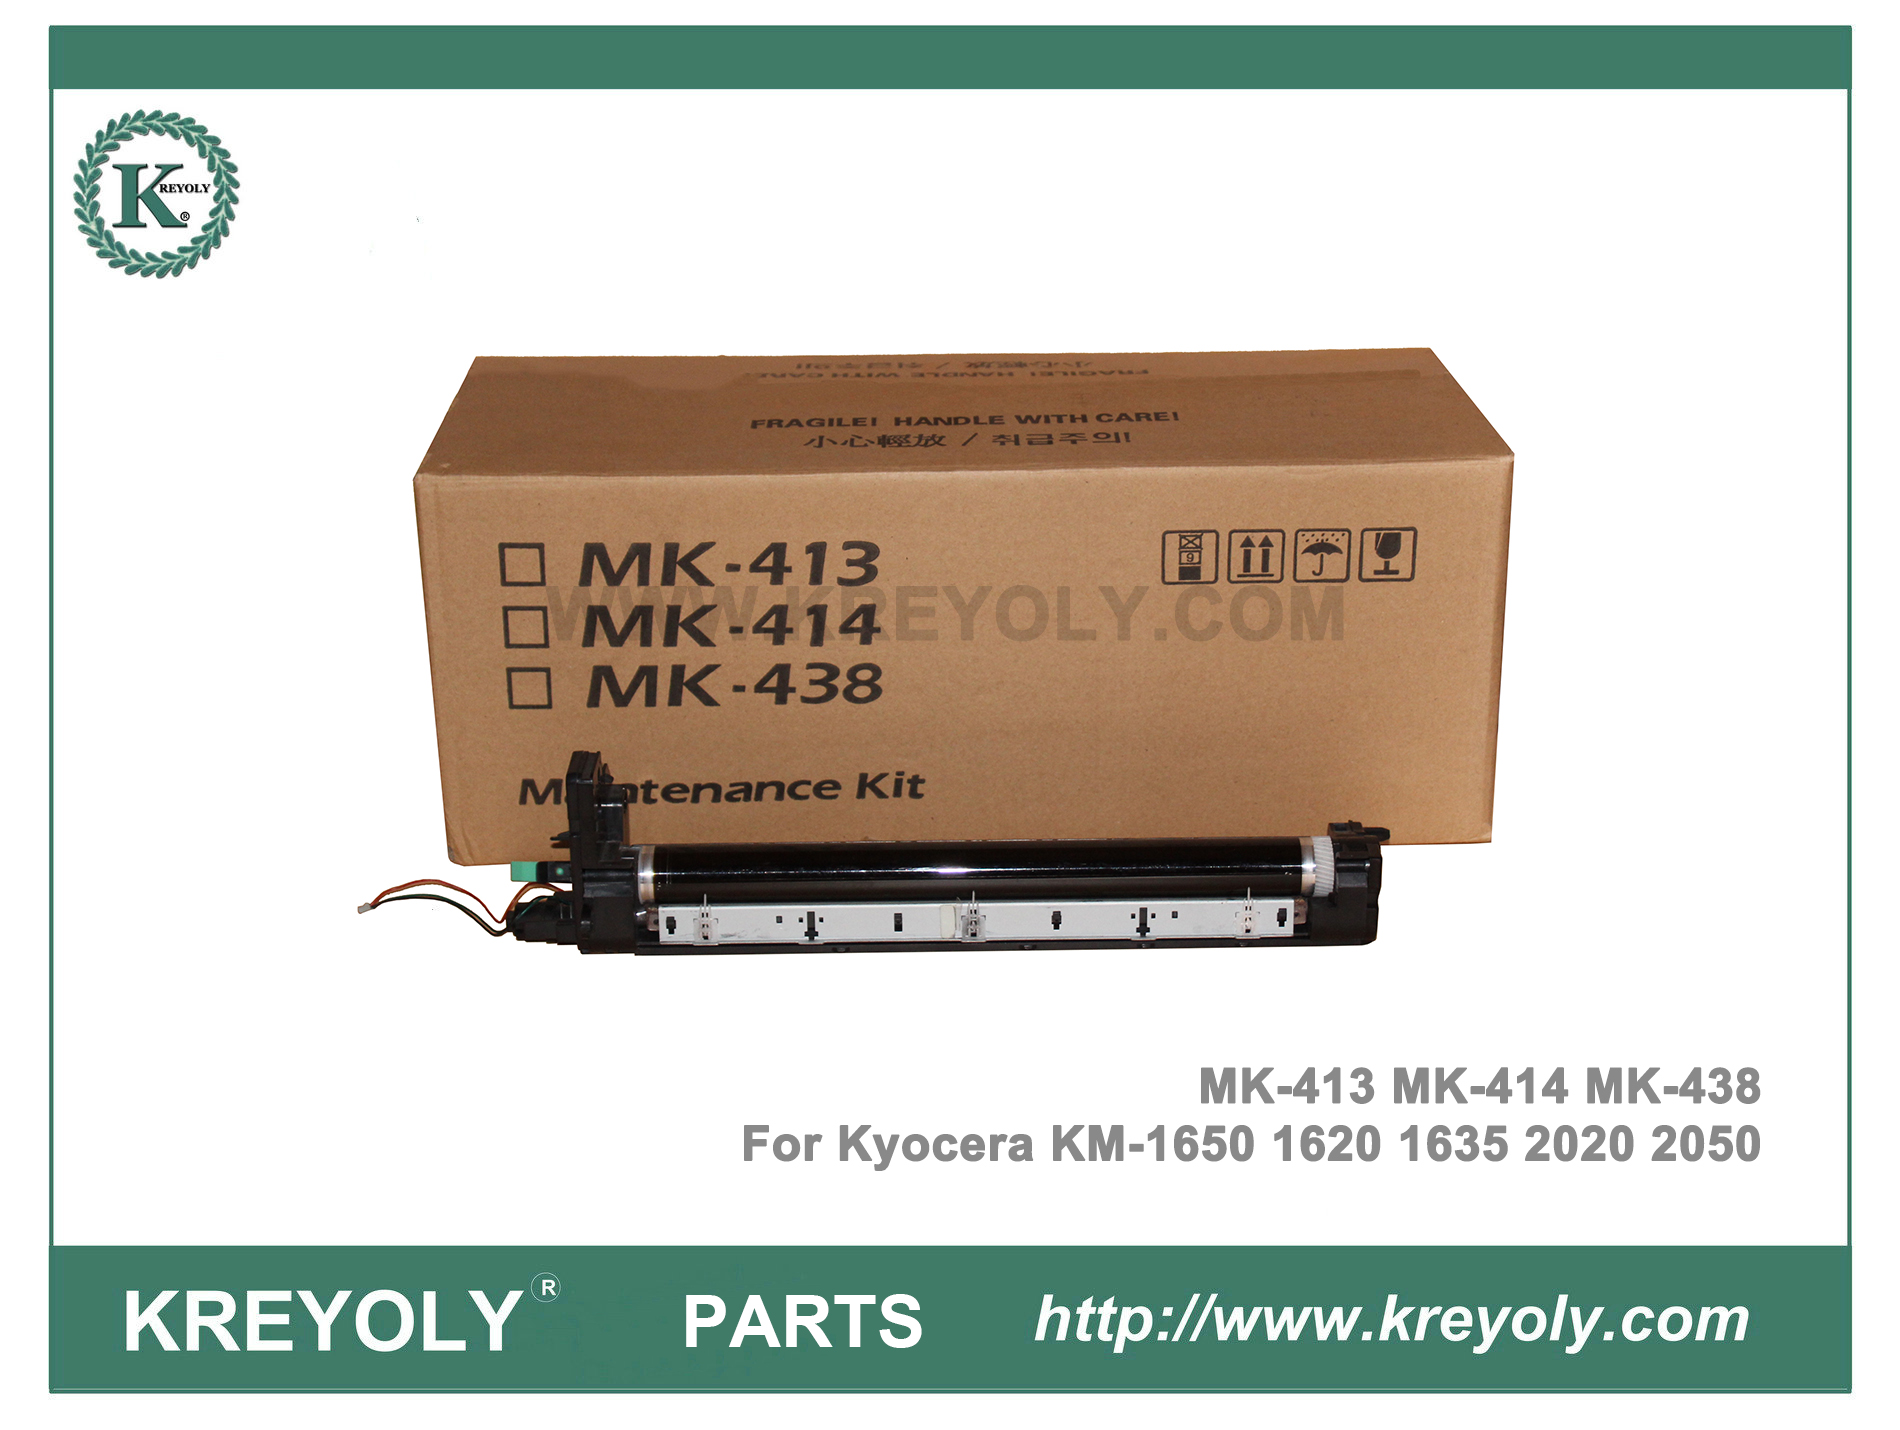 MK-413 MK-414 MK-438 Drum Unit for Kyocera KM1620 1635 1650 2020 2035 2050 Maintenance Kit